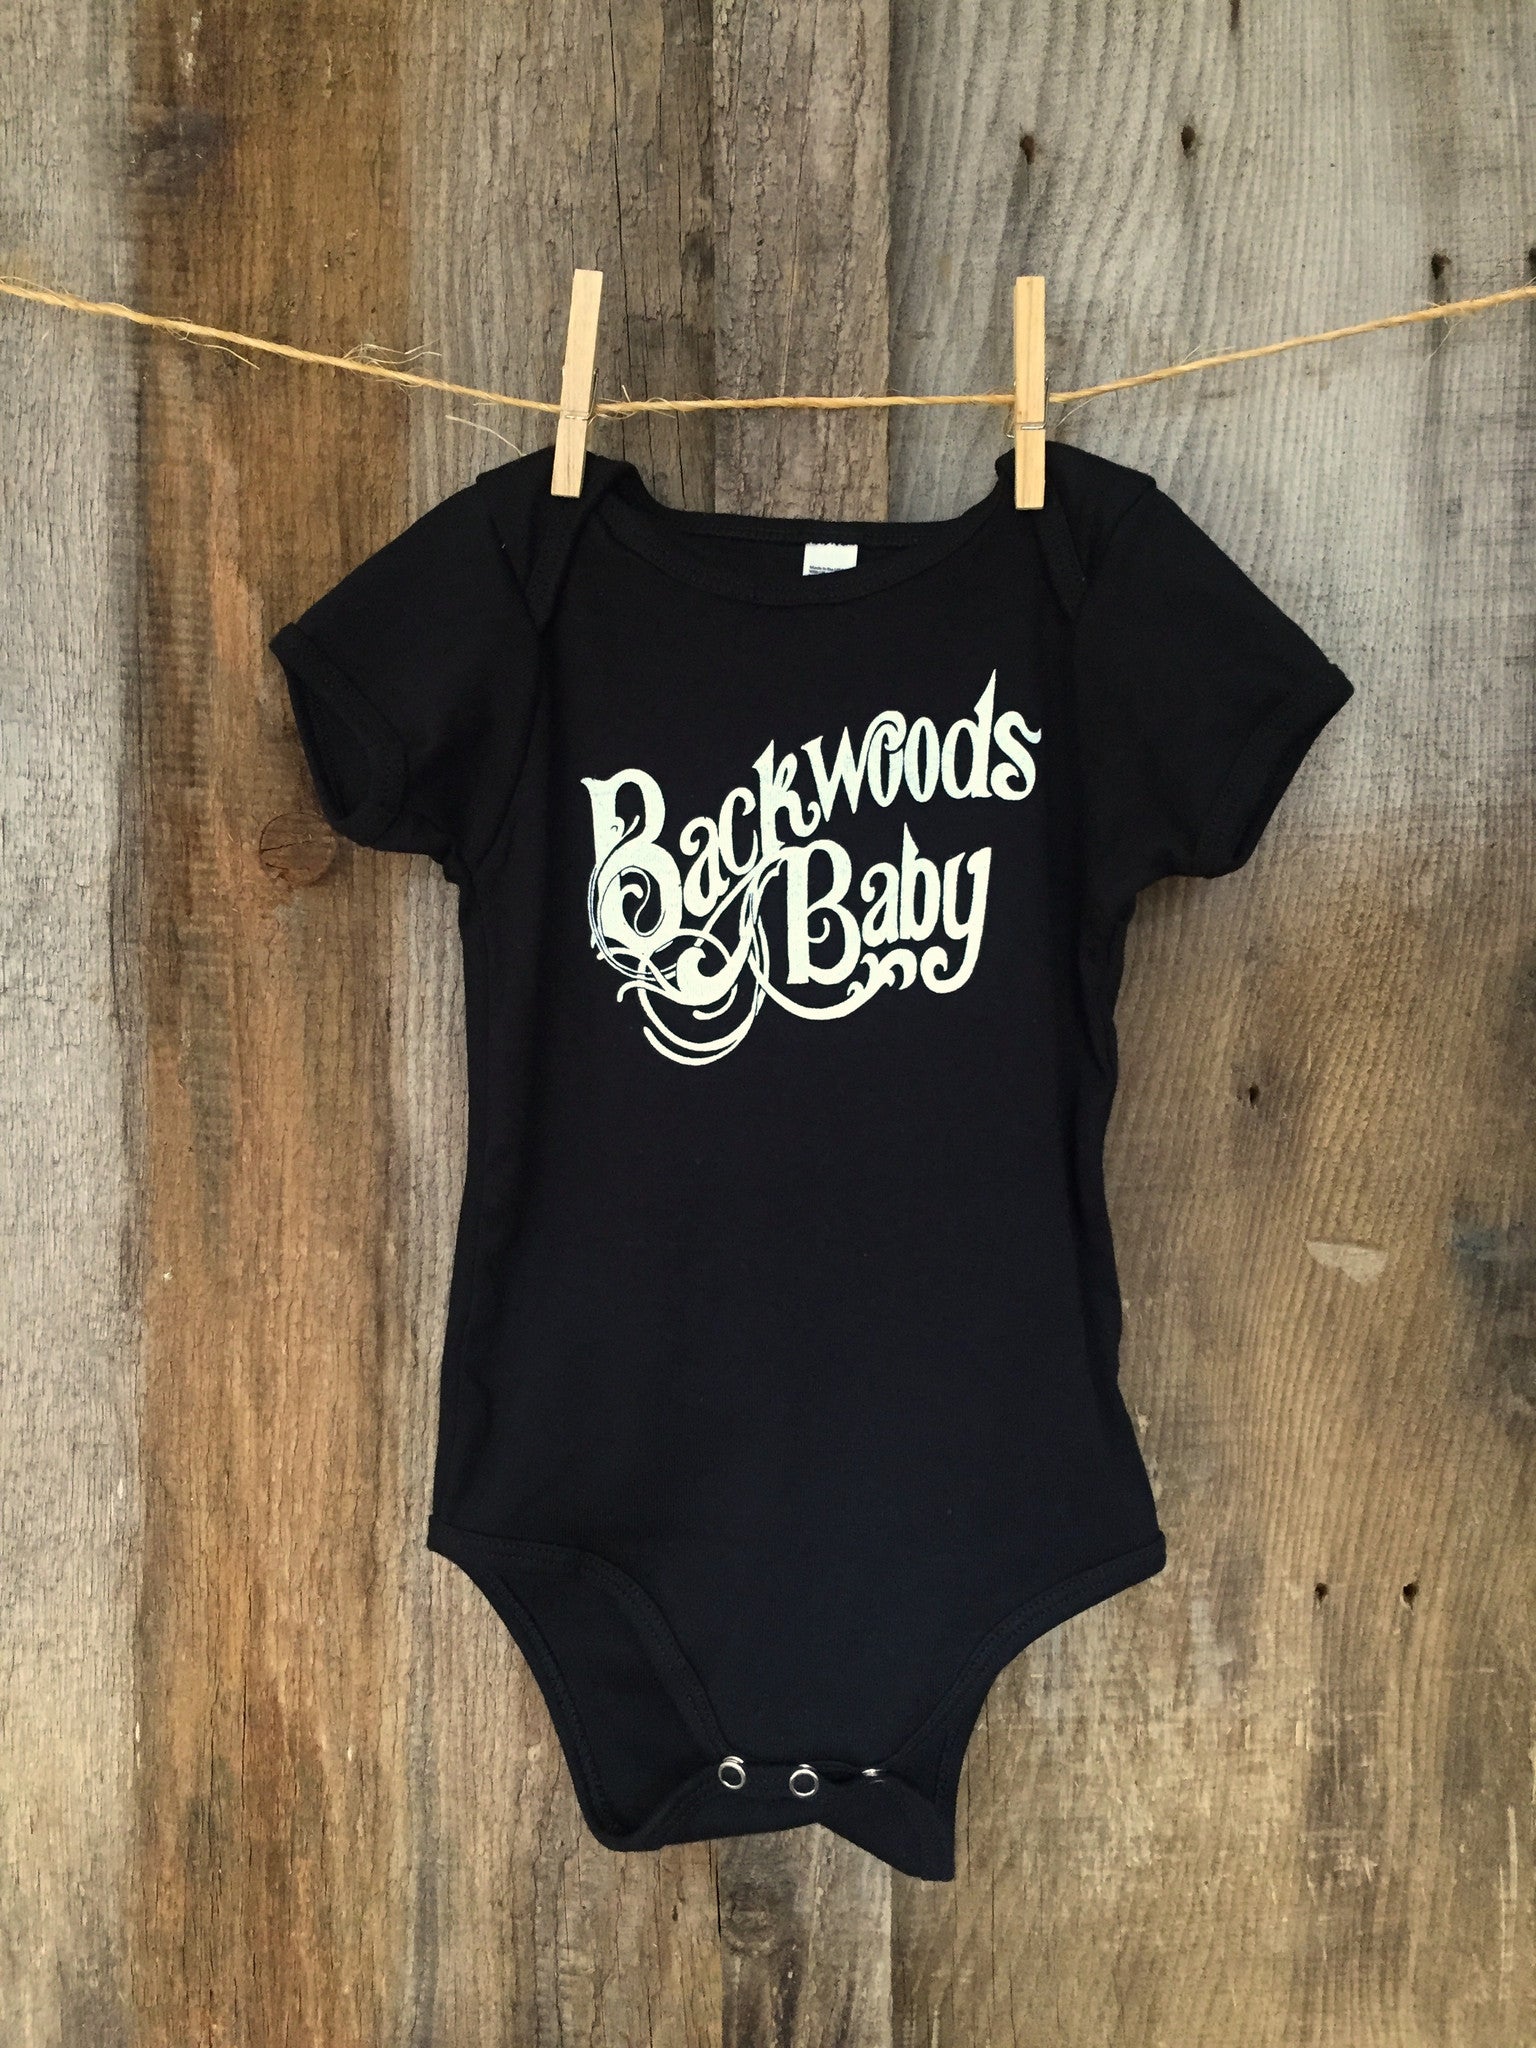 Bandit Baby "Backwoods Baby" Onesie Blk/White